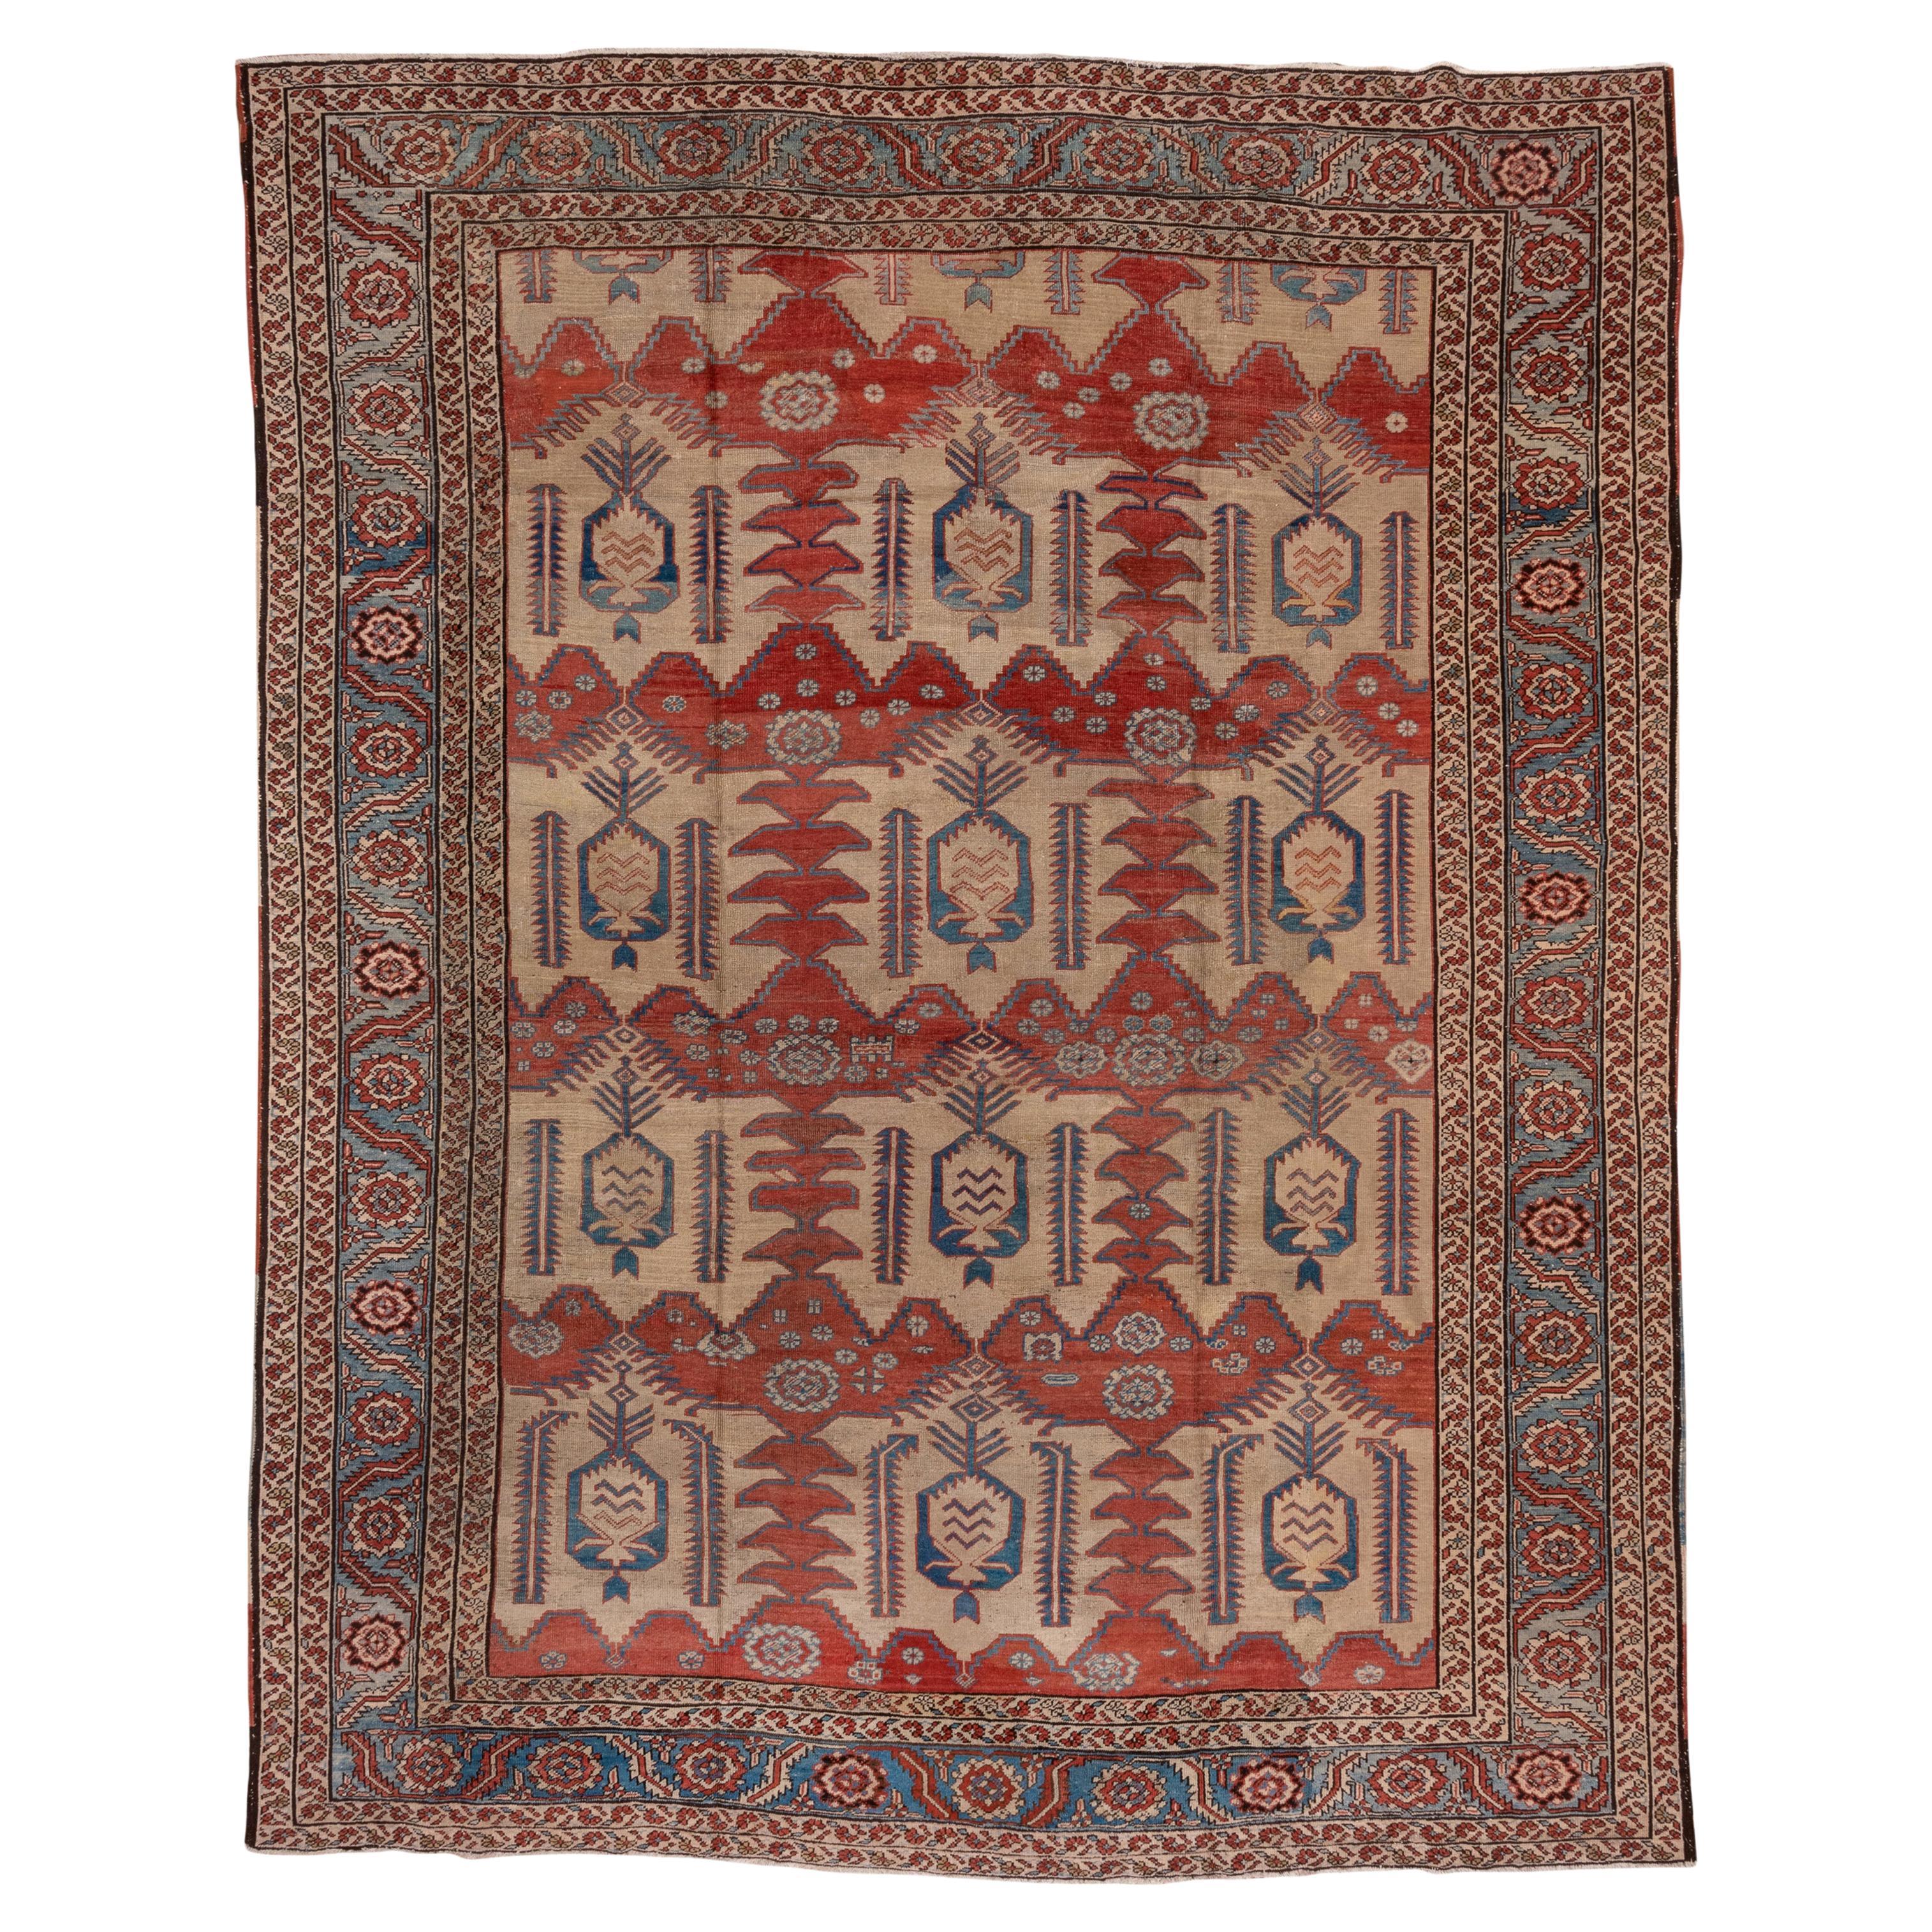 Late 19th Century Tribal Antique Heriz Serapi Carpet